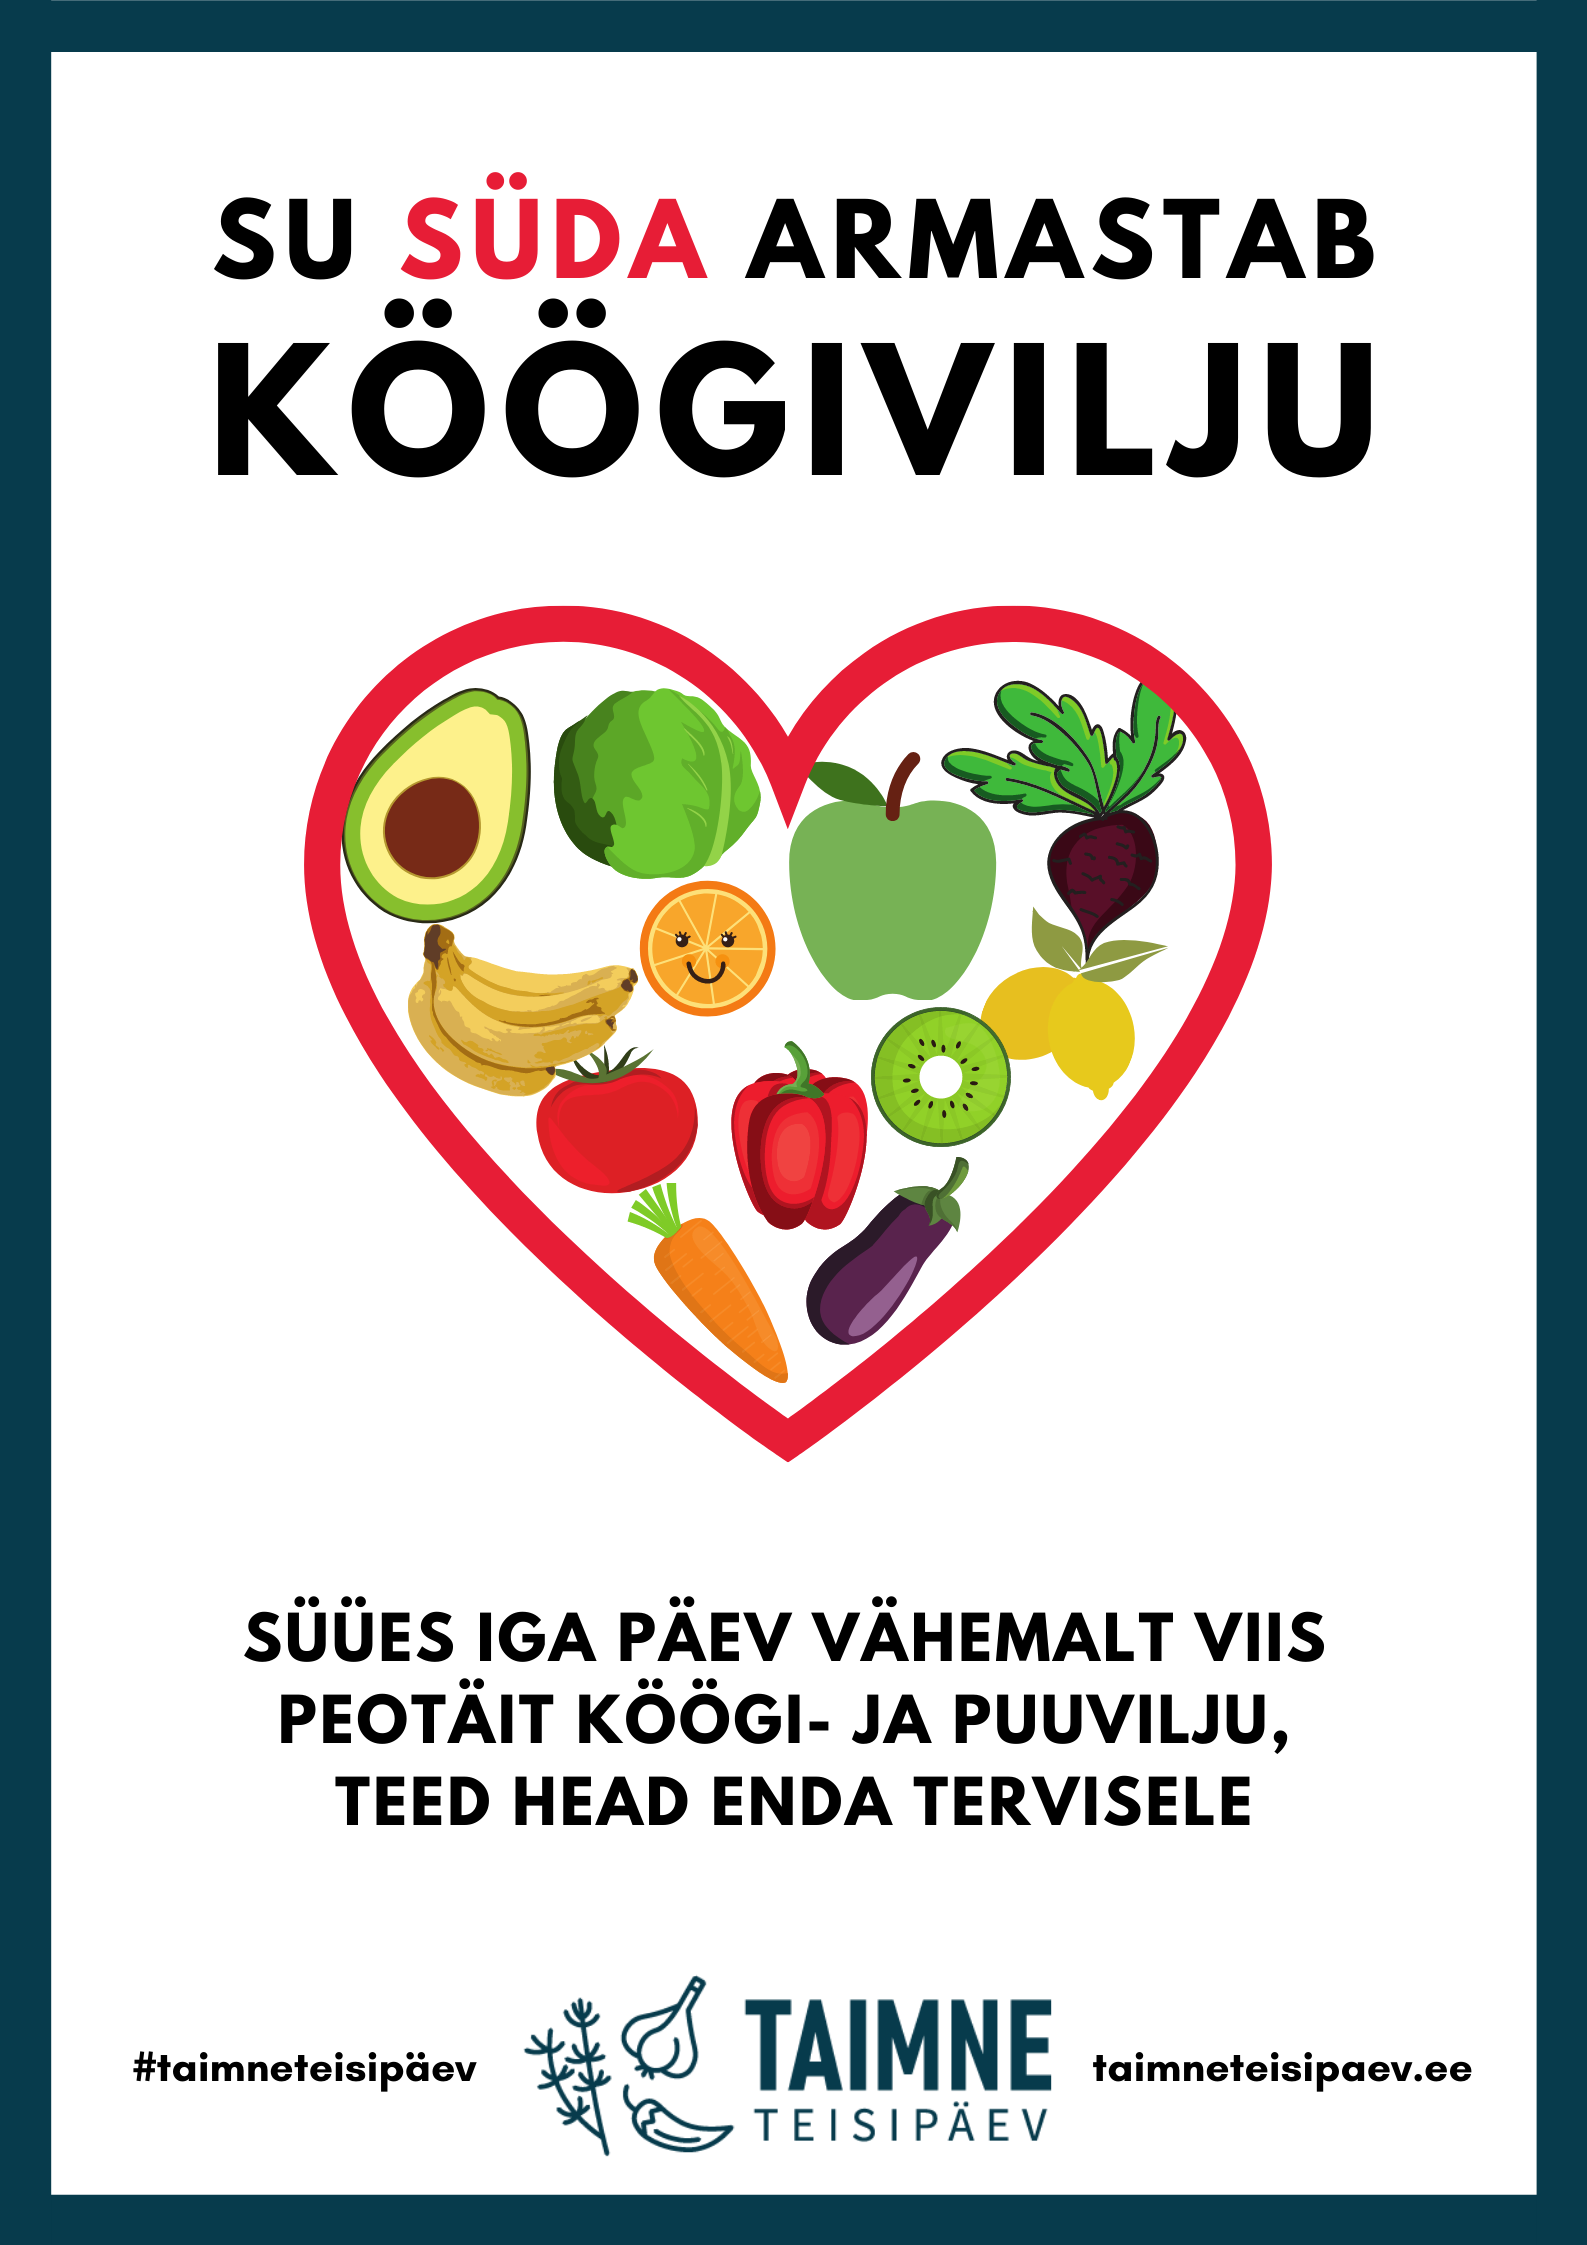 Food poster